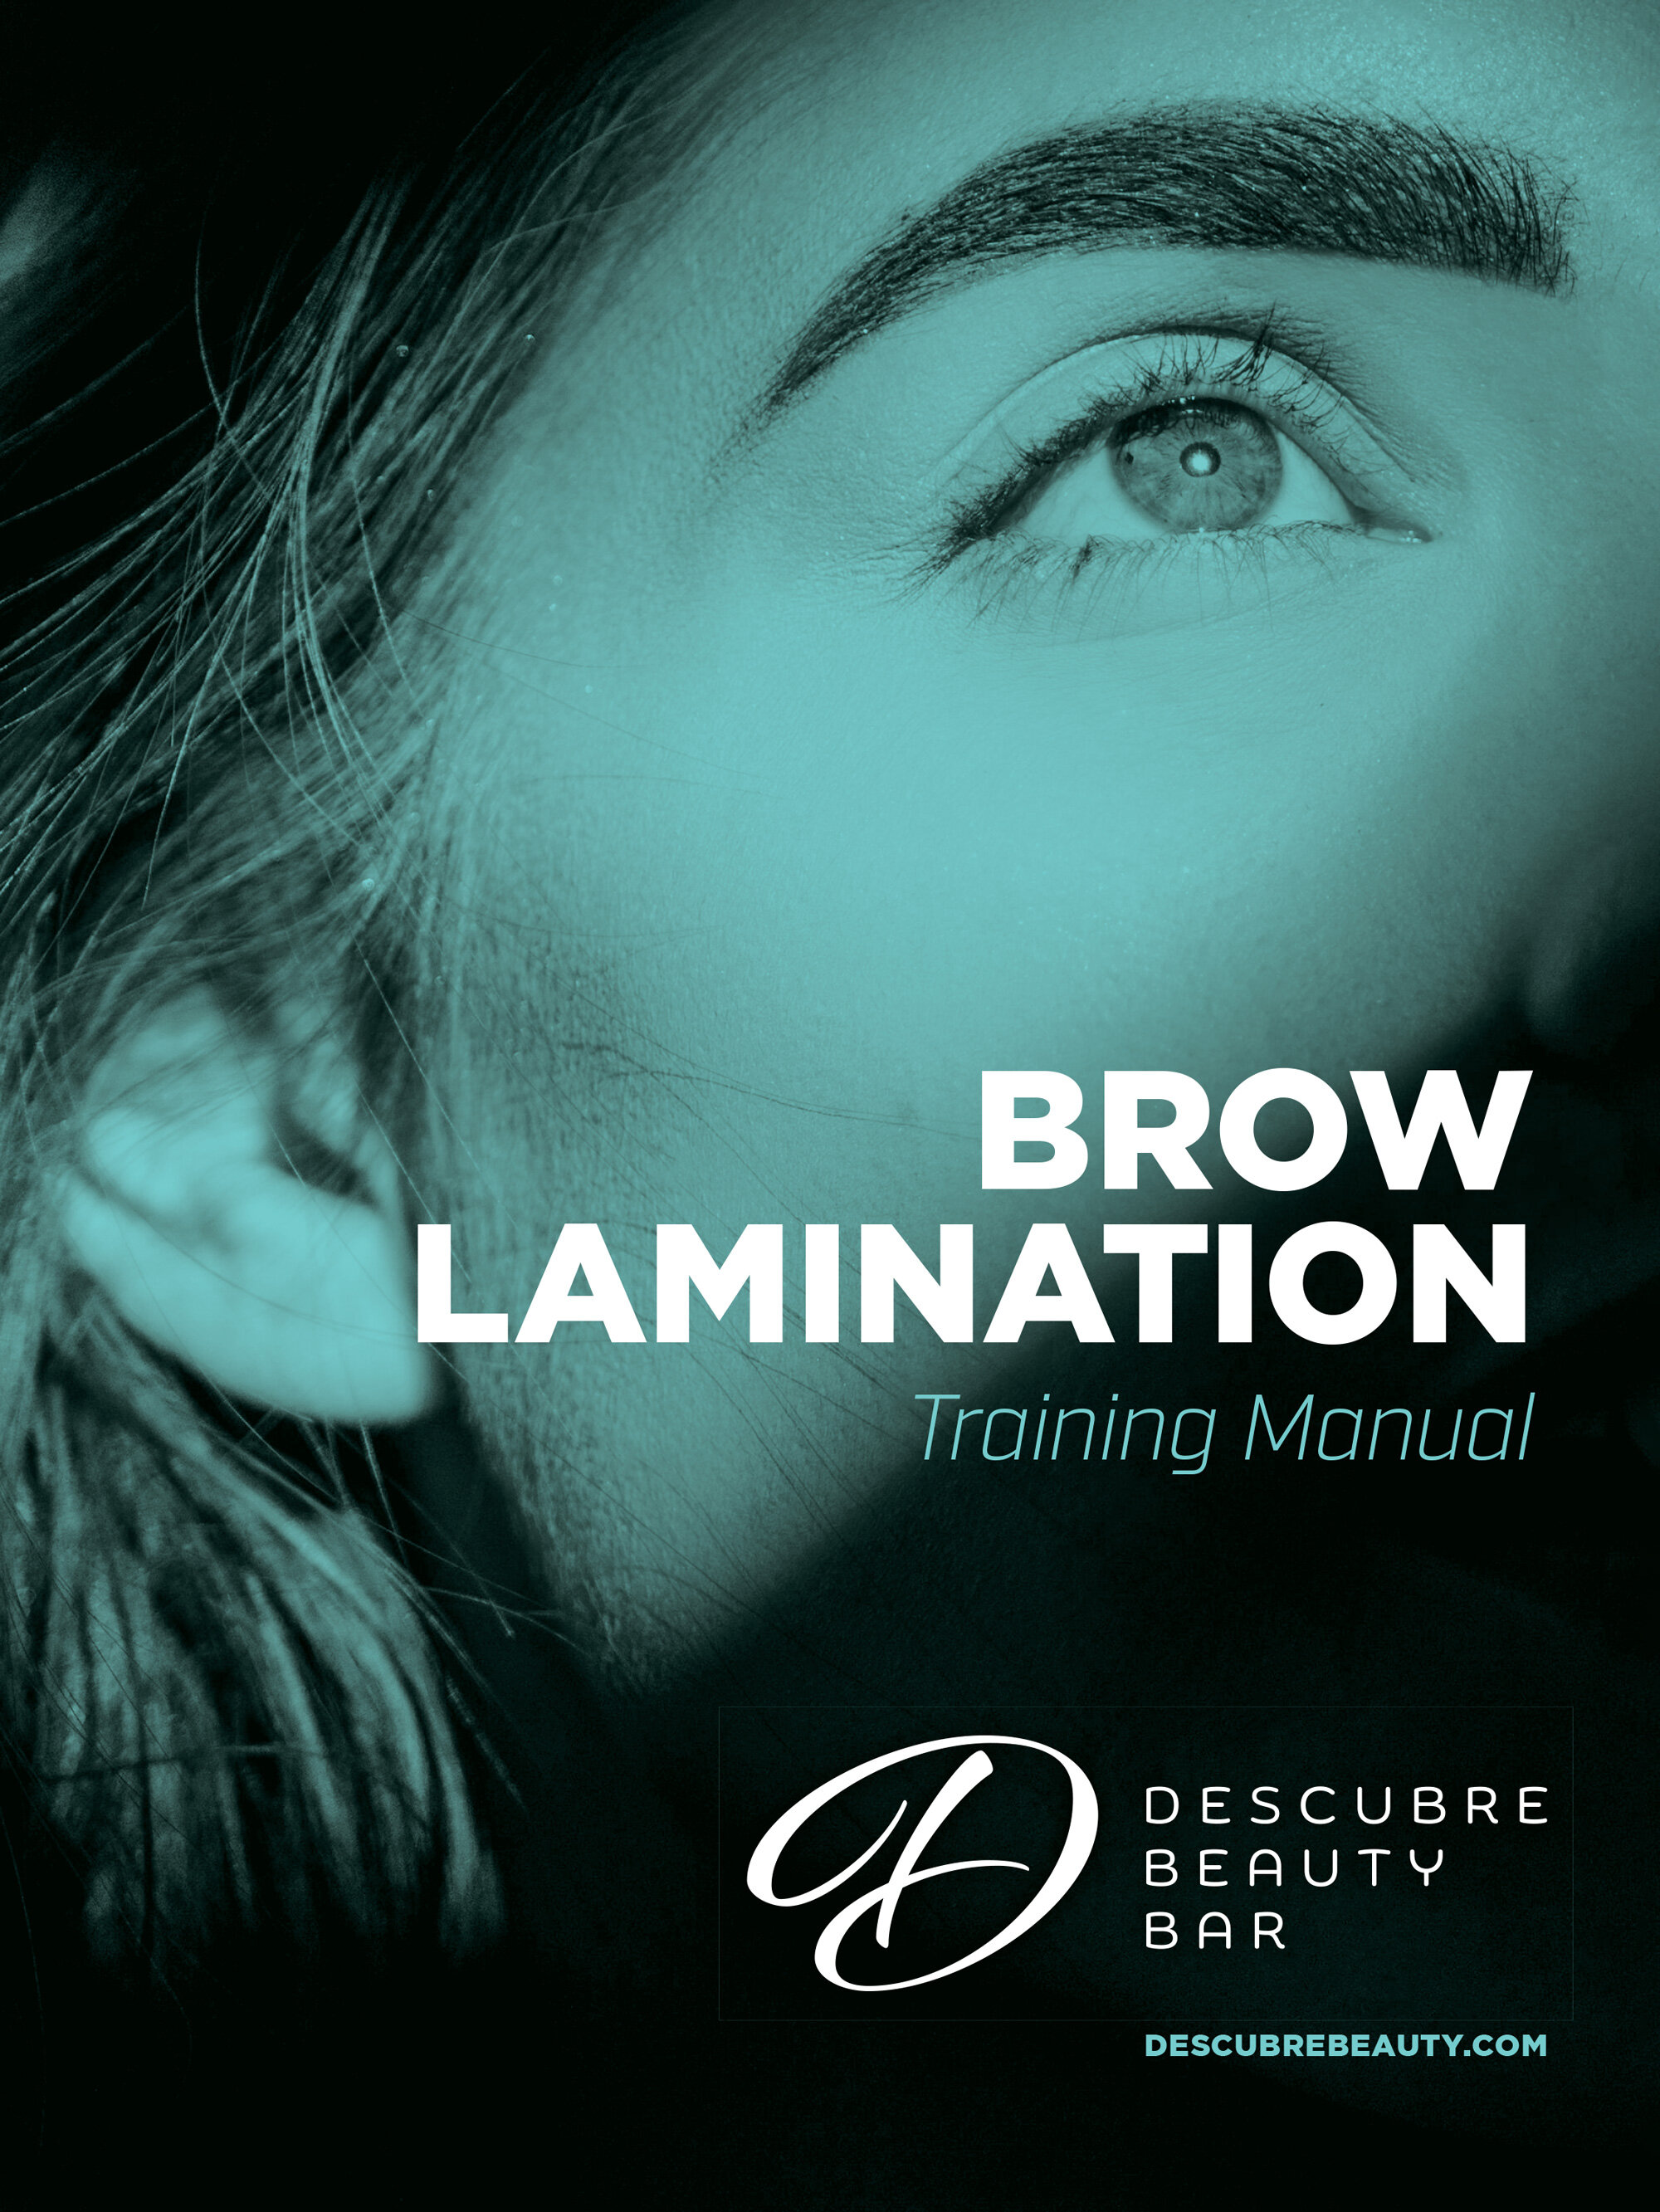 Brow-Lamination-Training-Manual.jpg